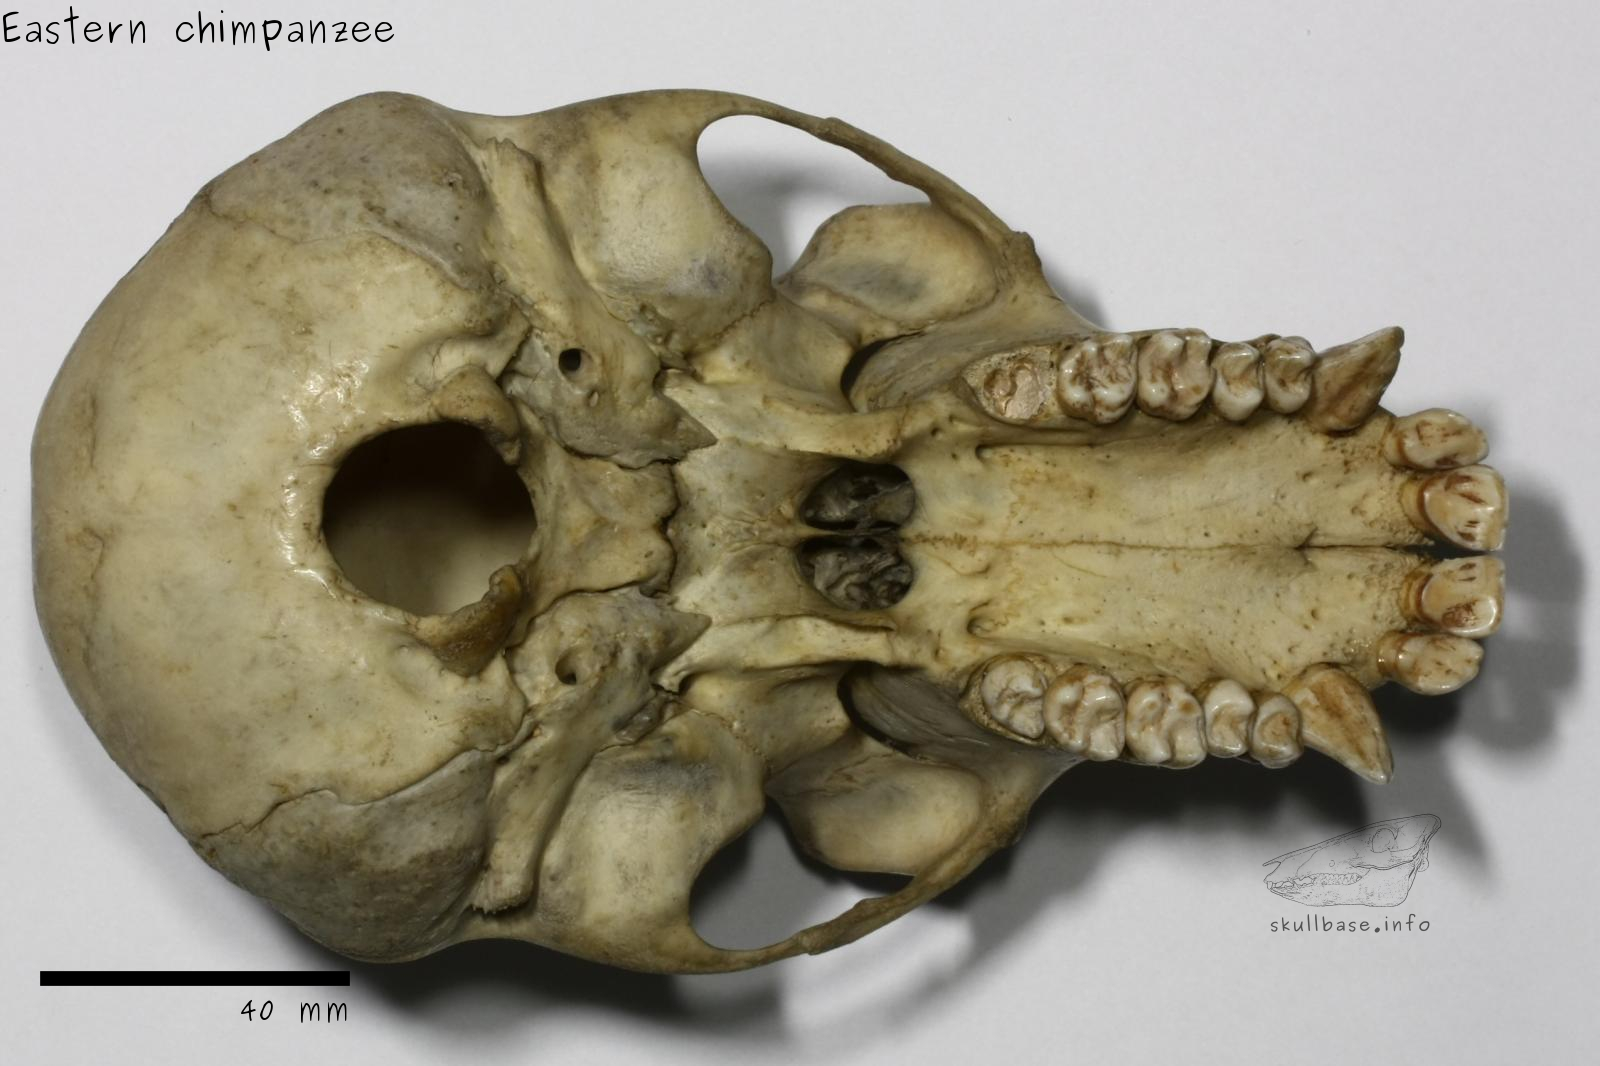 Eastern chimpanzee (Pan troglodytes schweinfurthii) skull ventral view